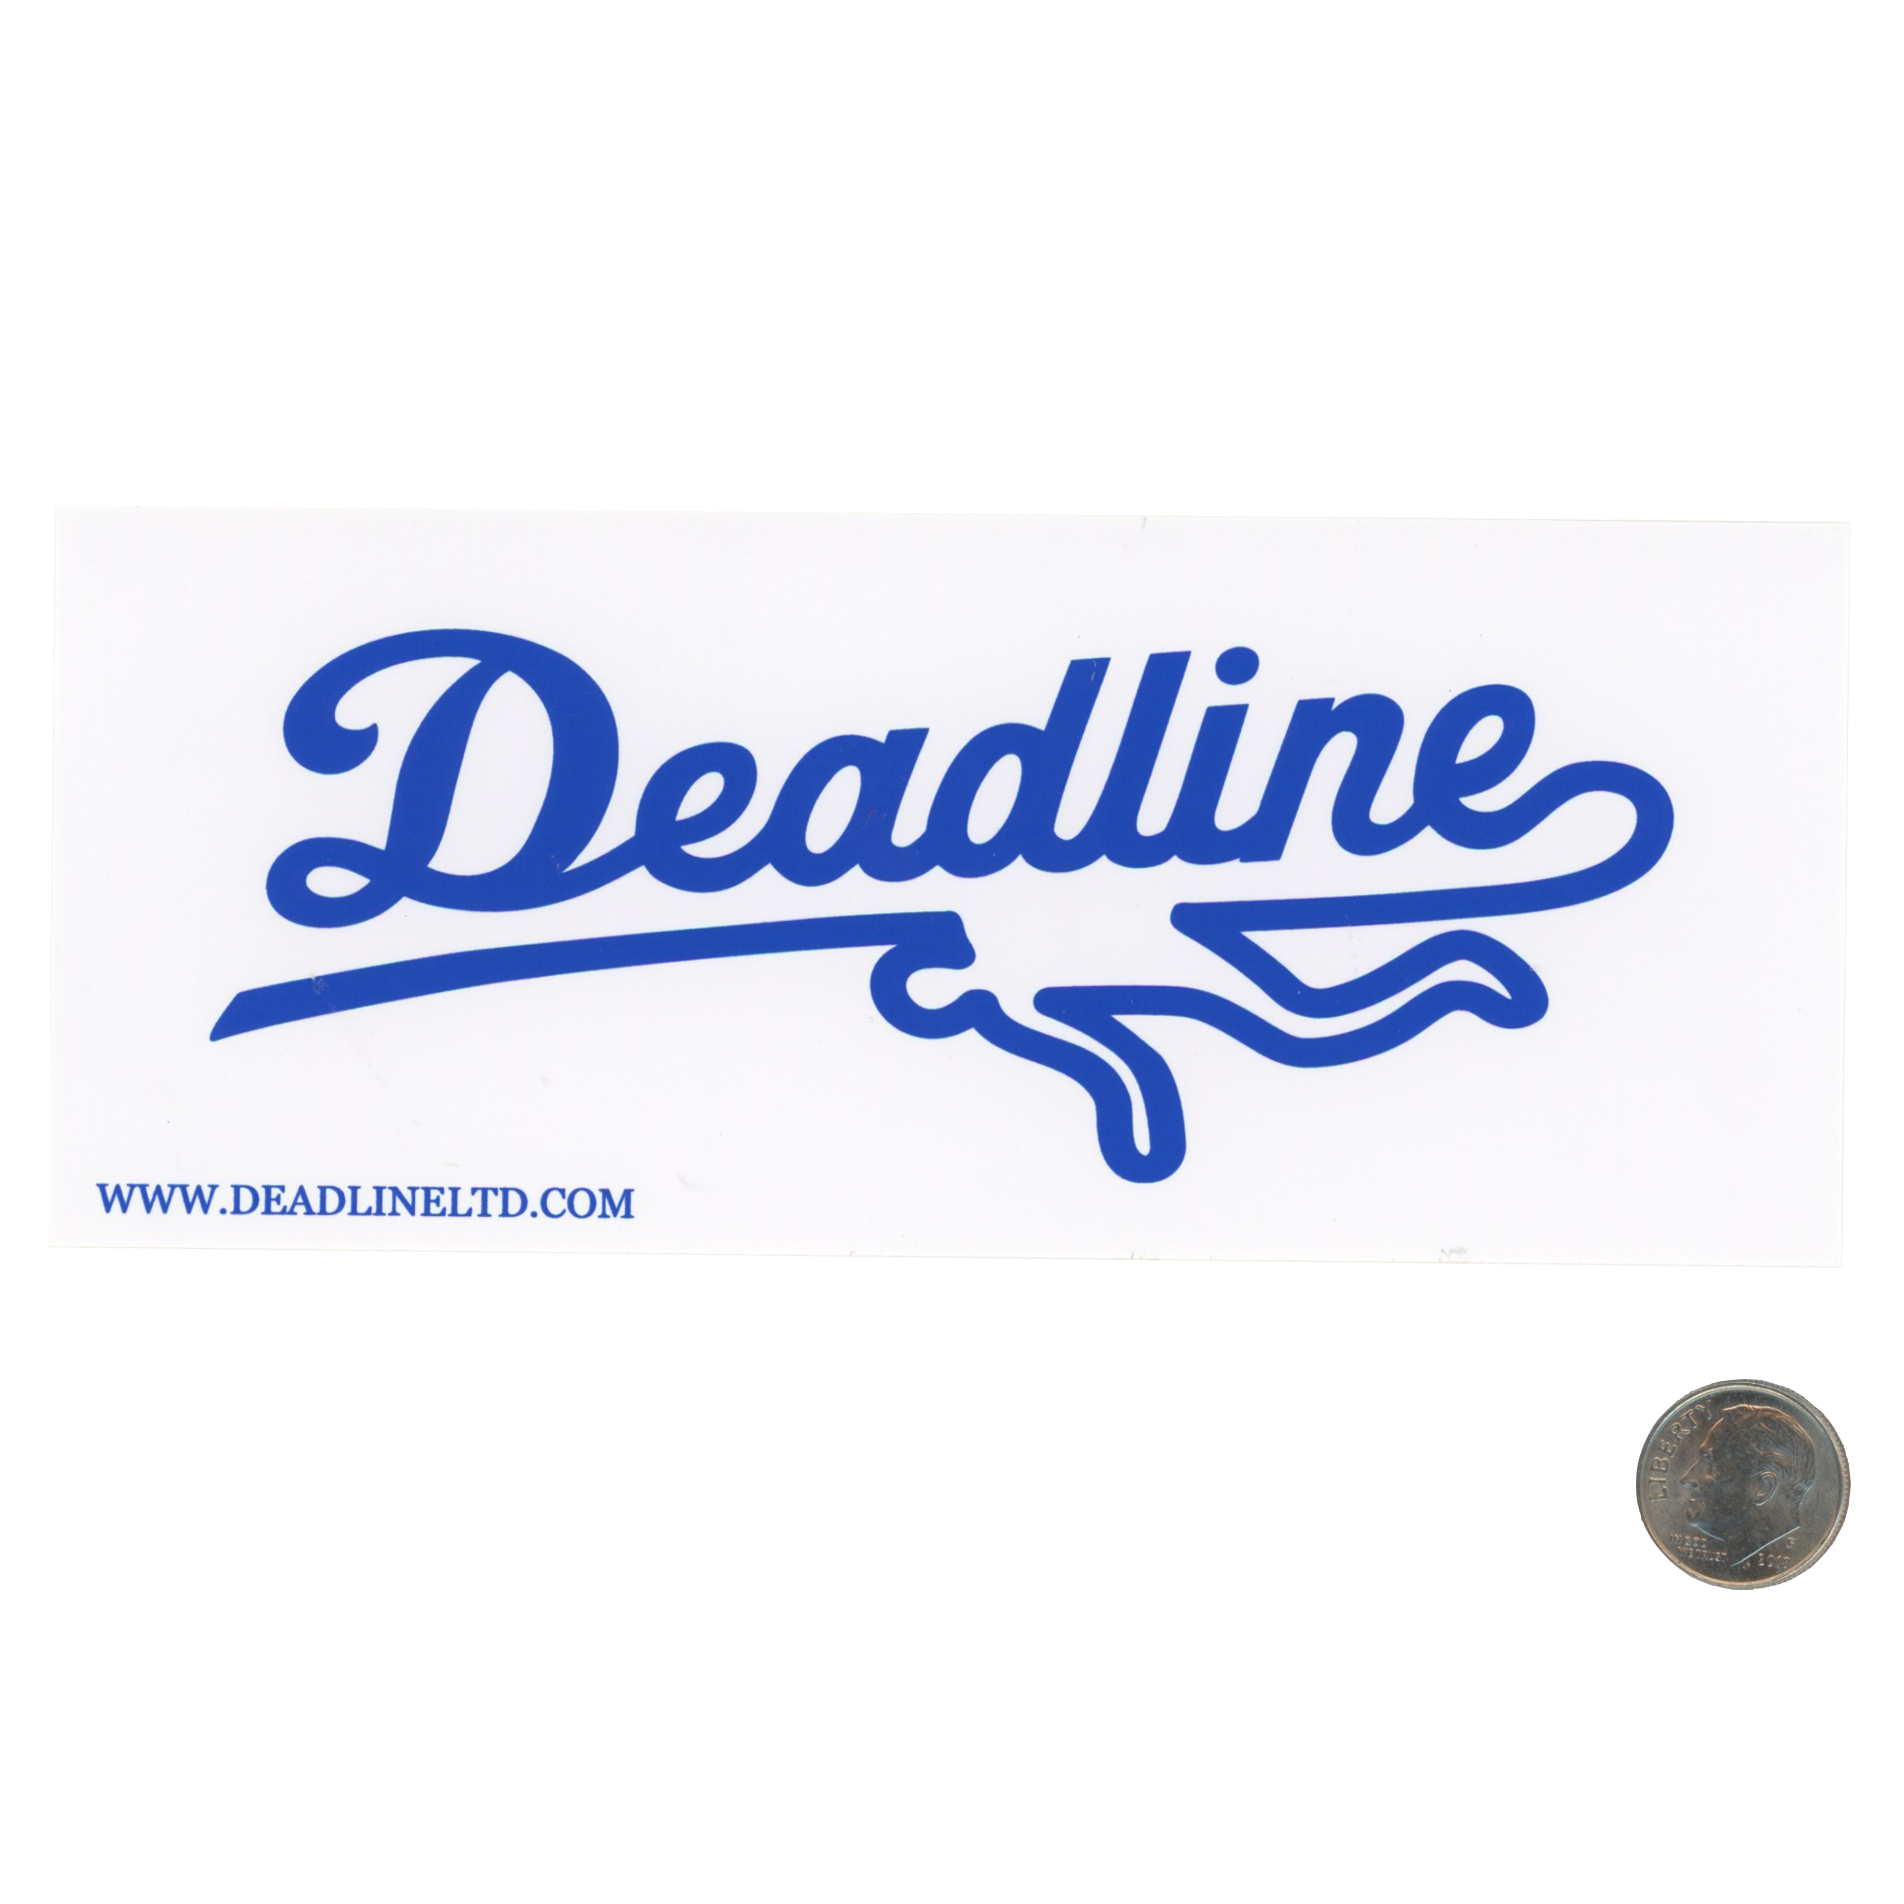 Deadline Blue Font Logo Sticker with dime